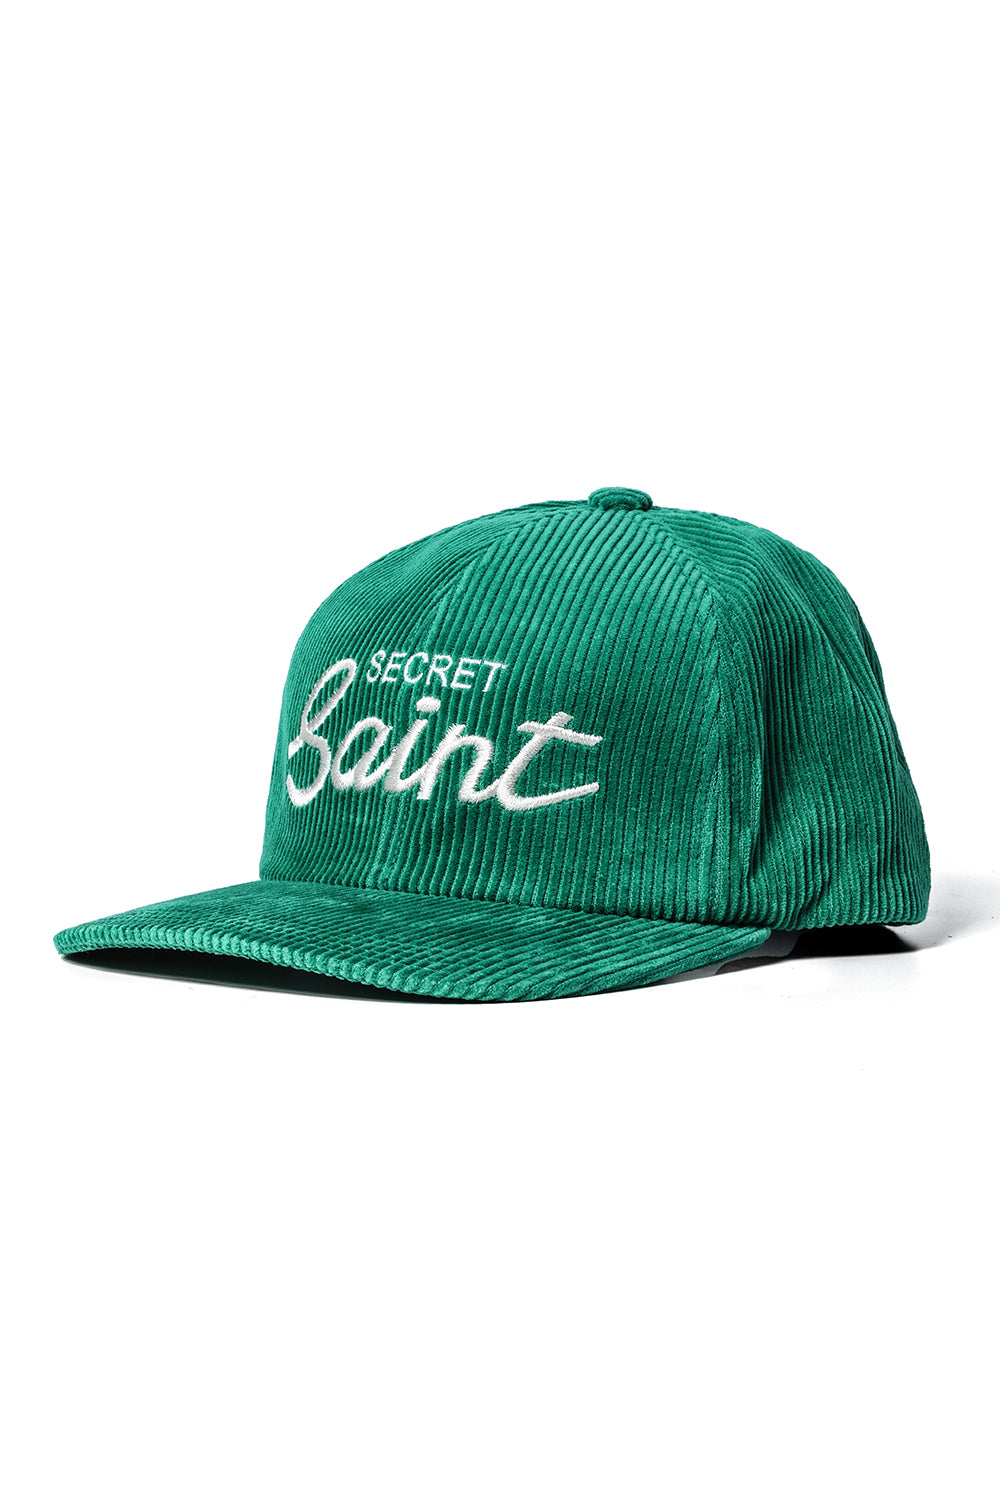 saint michael CAP CORDUROY Green 【新品】